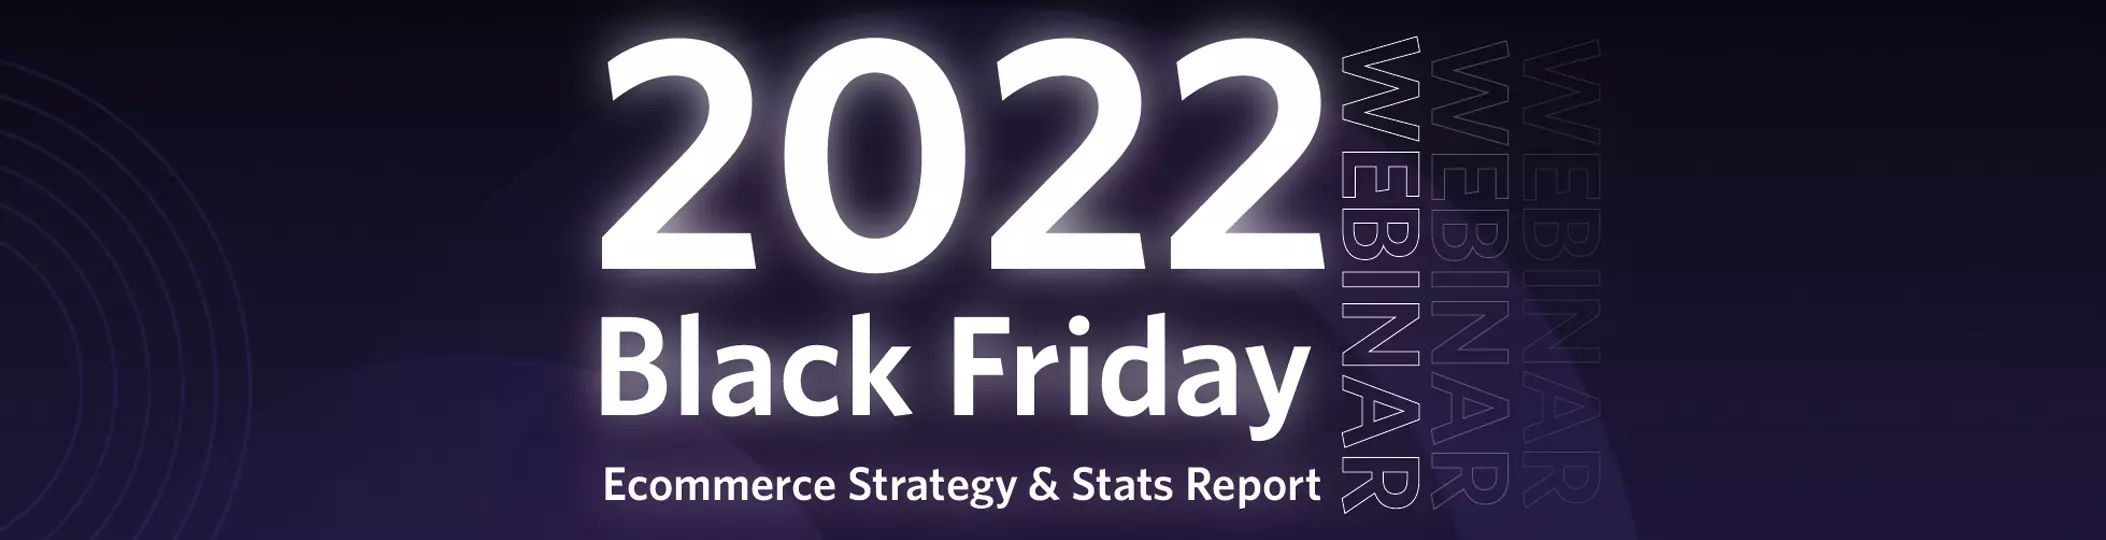 2022 Black Friday Ecommerce Strategy & Stats Report – Webinar